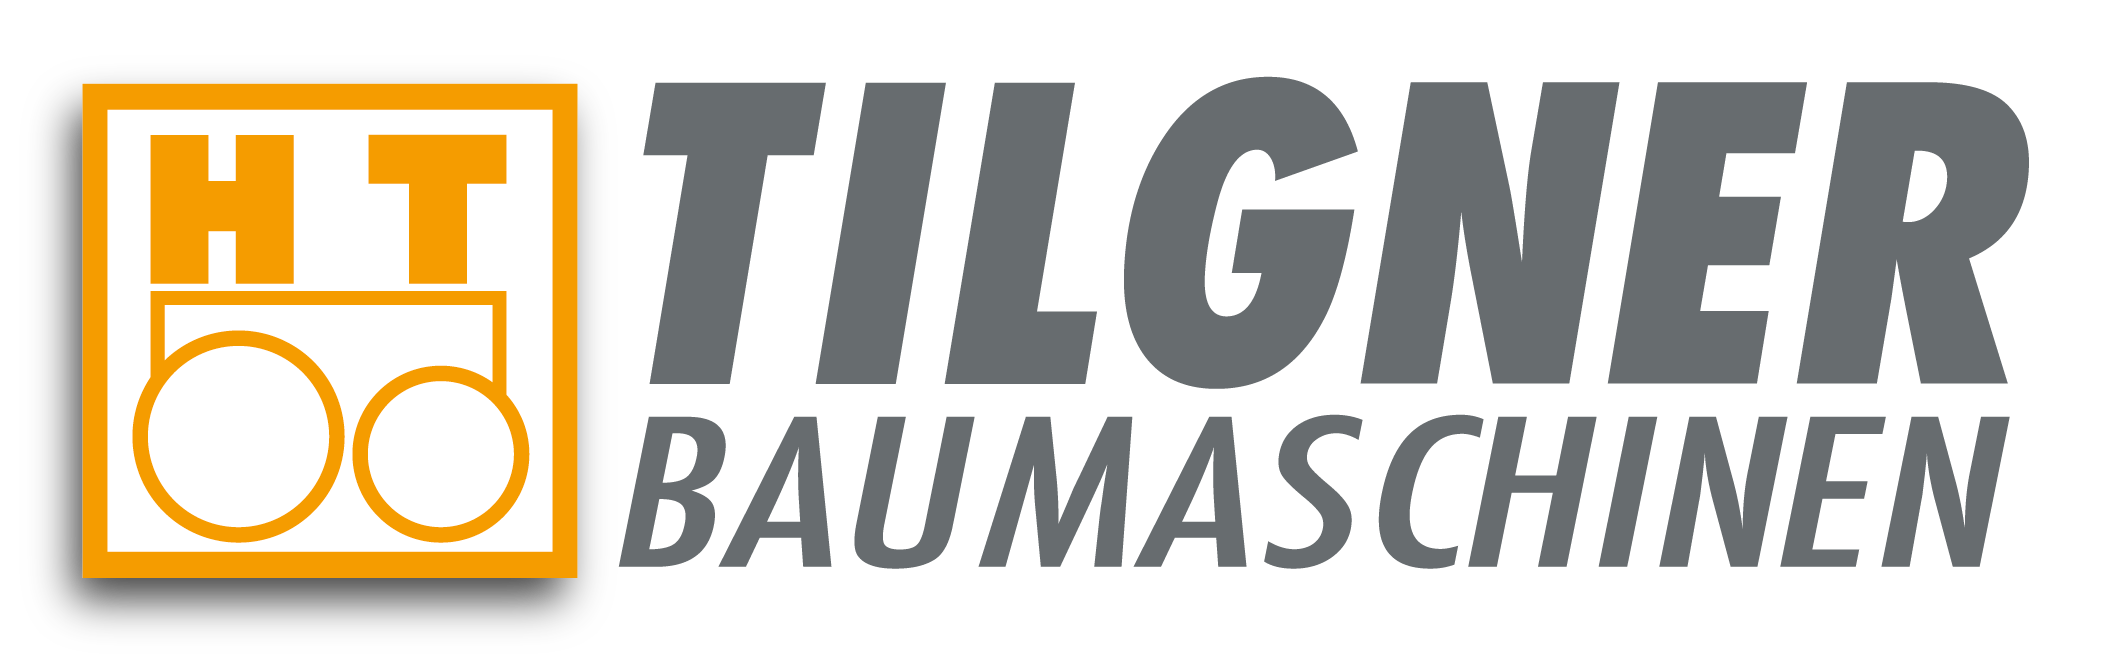 Tilgner Baumaschinen GmbH